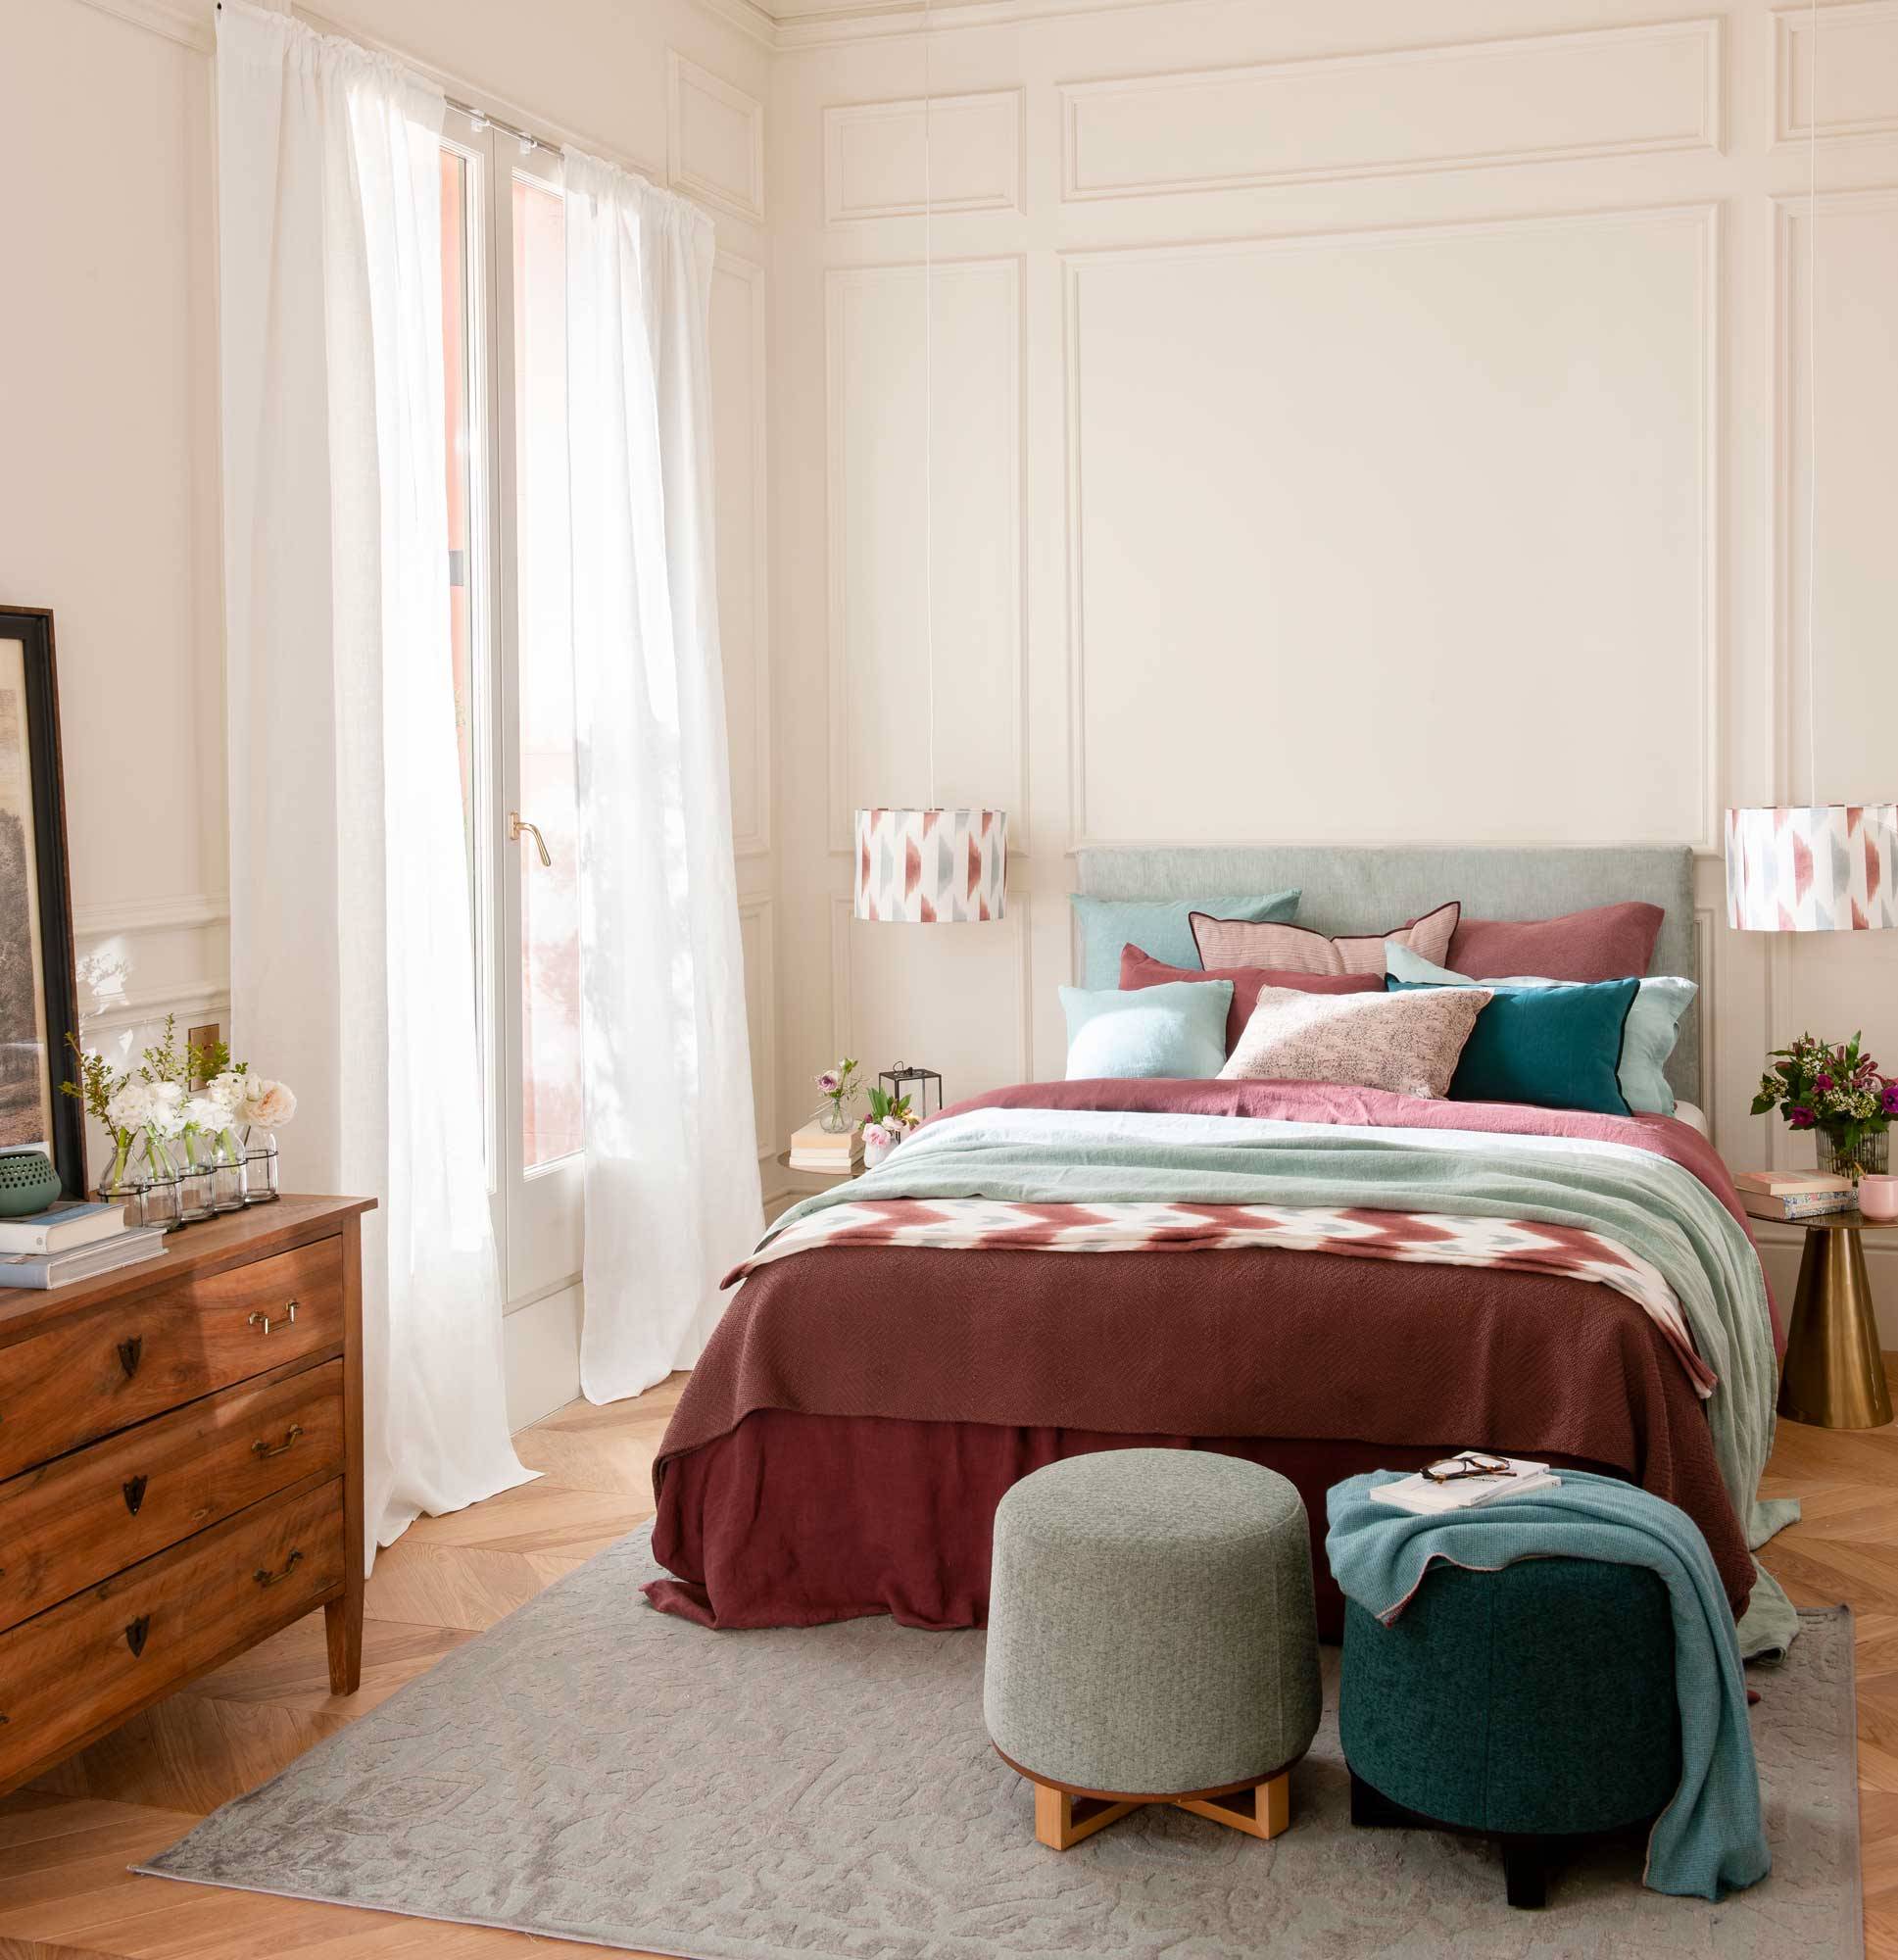 dormitorio-estilo-clasico-con-colores-00501572 O